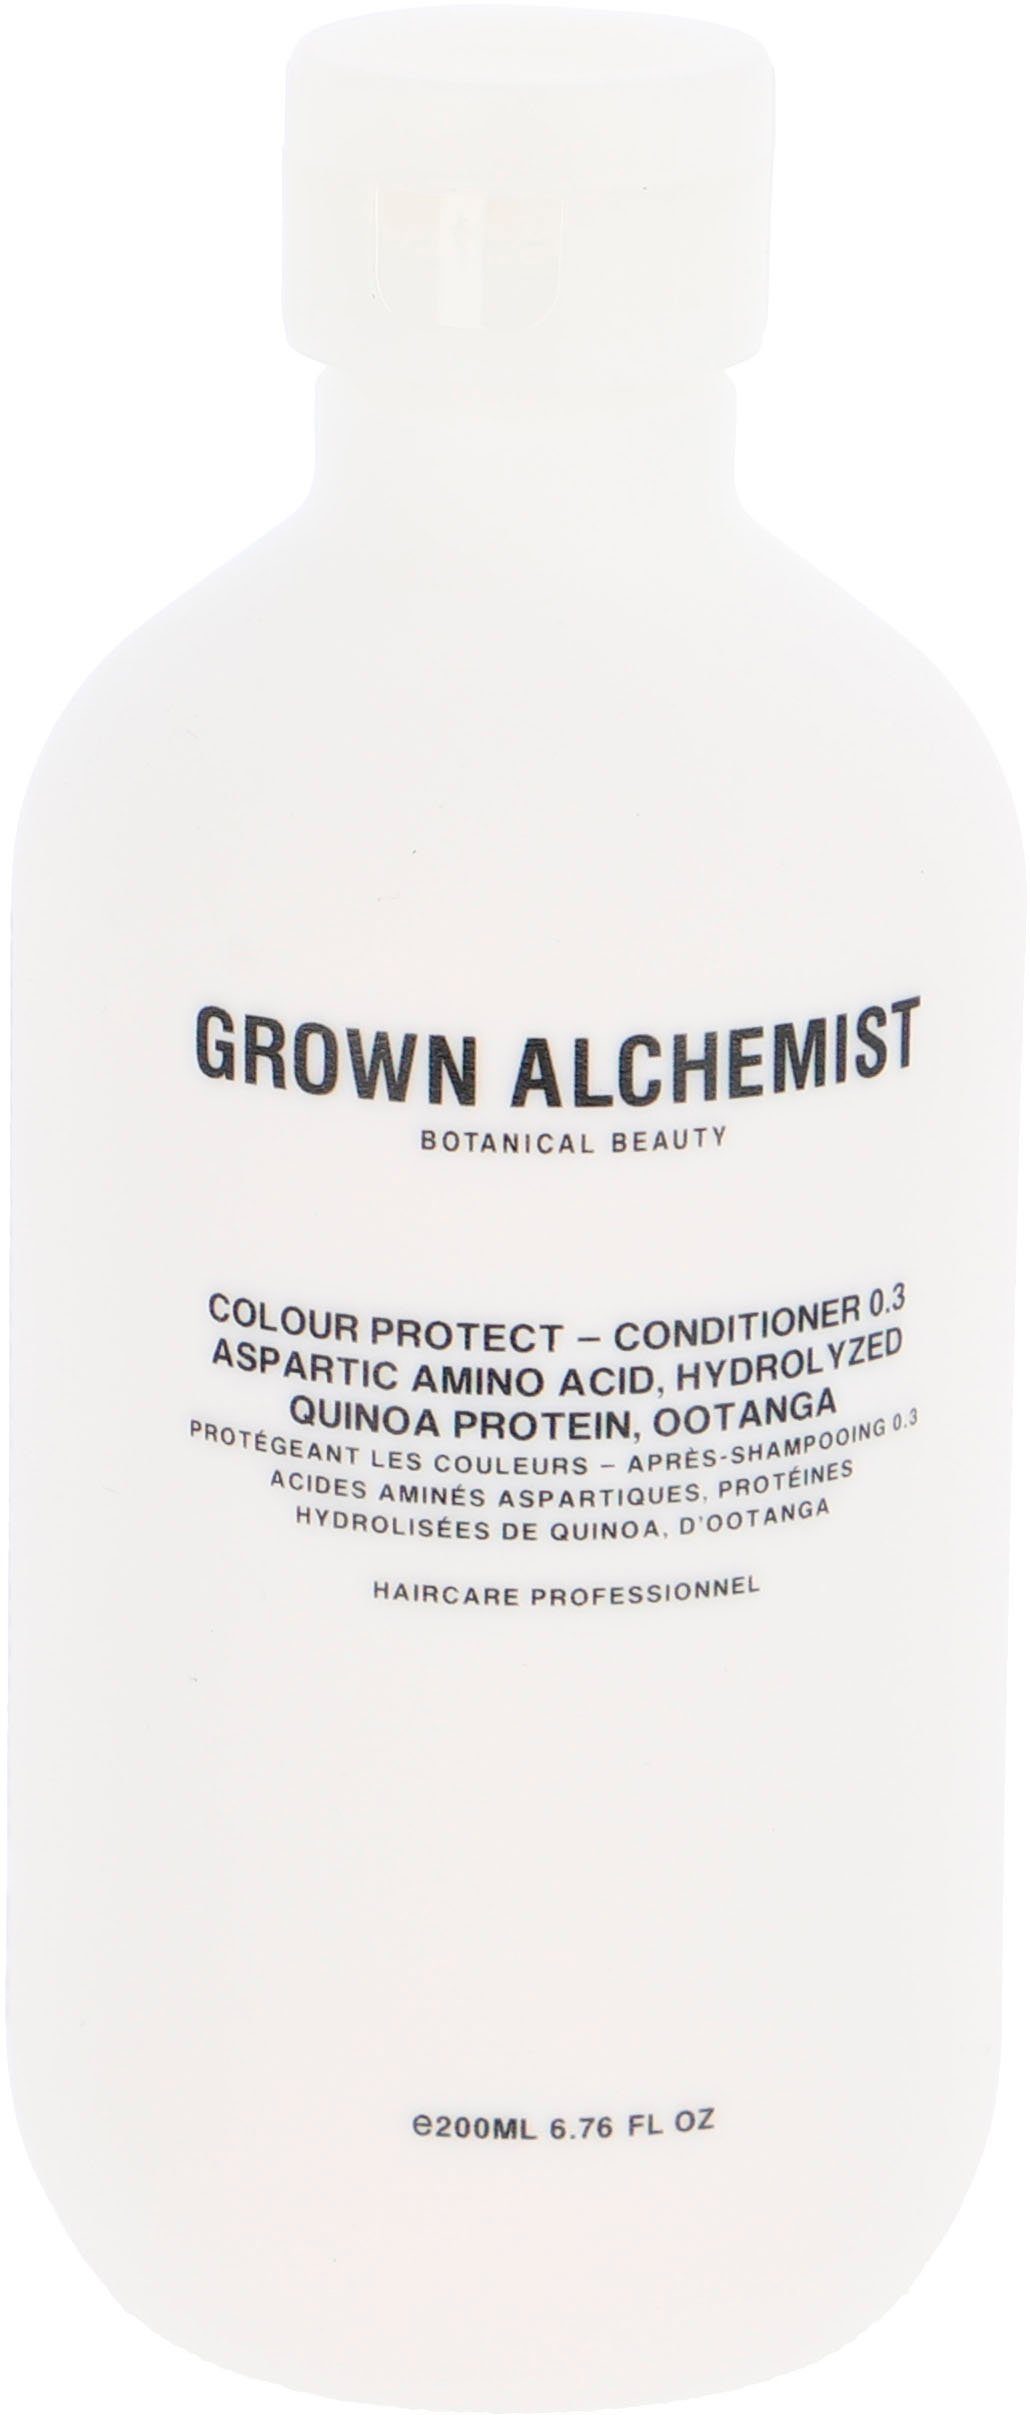 GROWN ALCHEMIST Haarspülung Colour Protect 0.3, Conditioner Hydrolyzed - Amino Protein, Quinoa Acid, Ootanga Aspartic